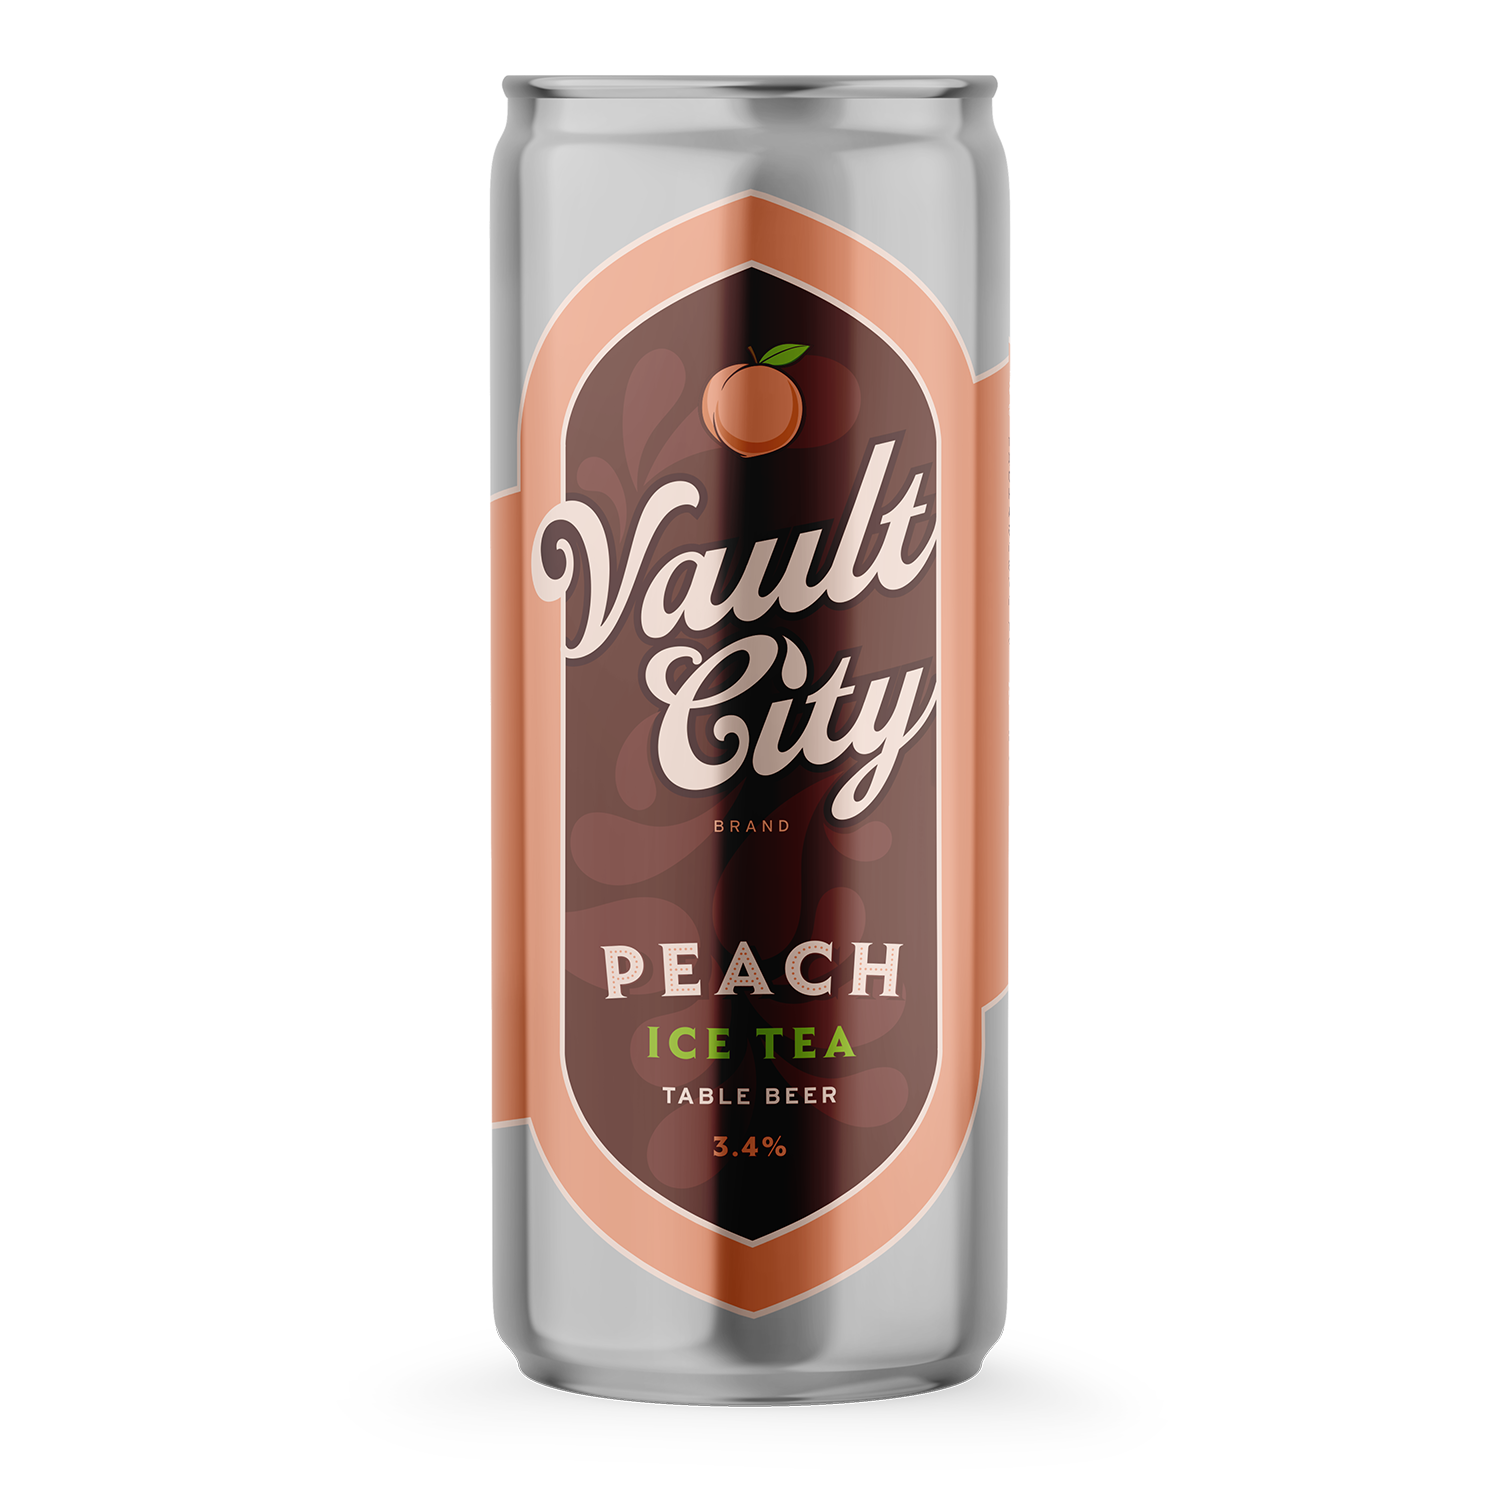 Vault City Peach Ice Tea Table Beer